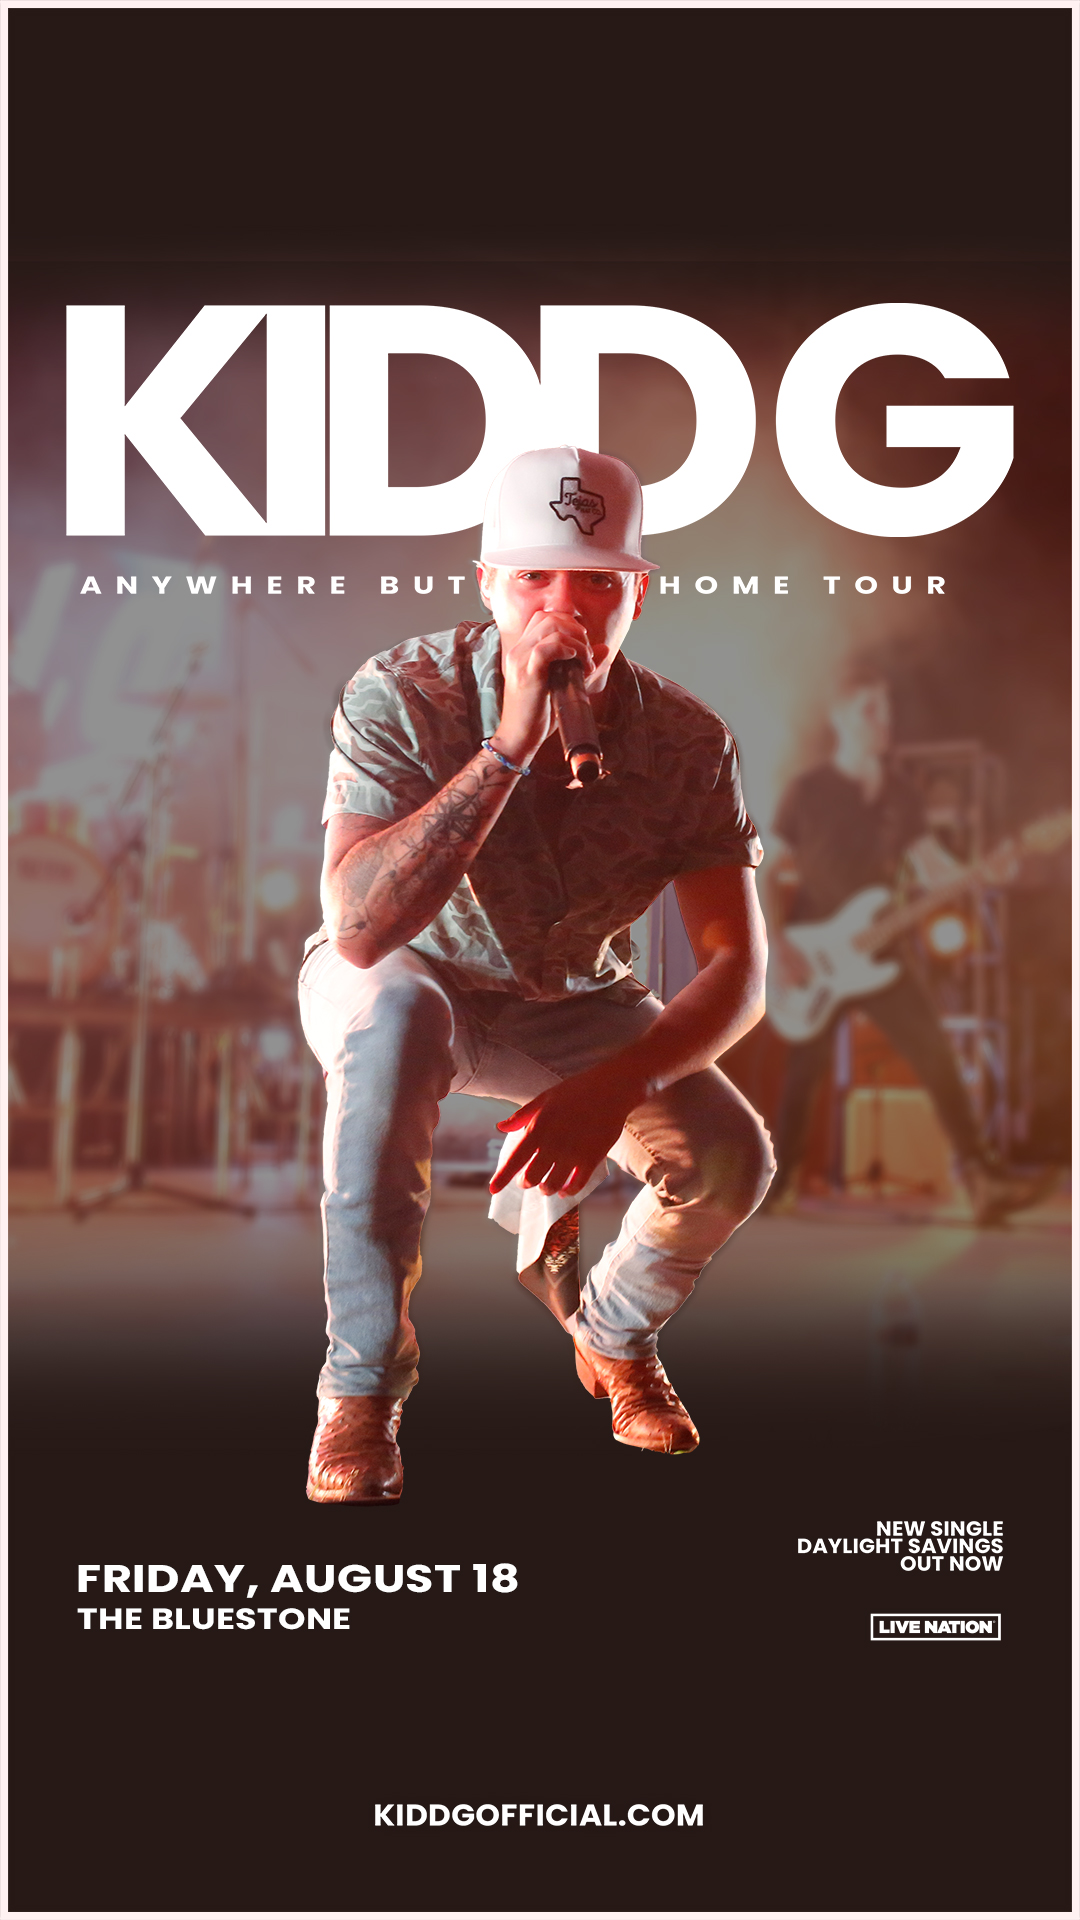 the kidd g tour